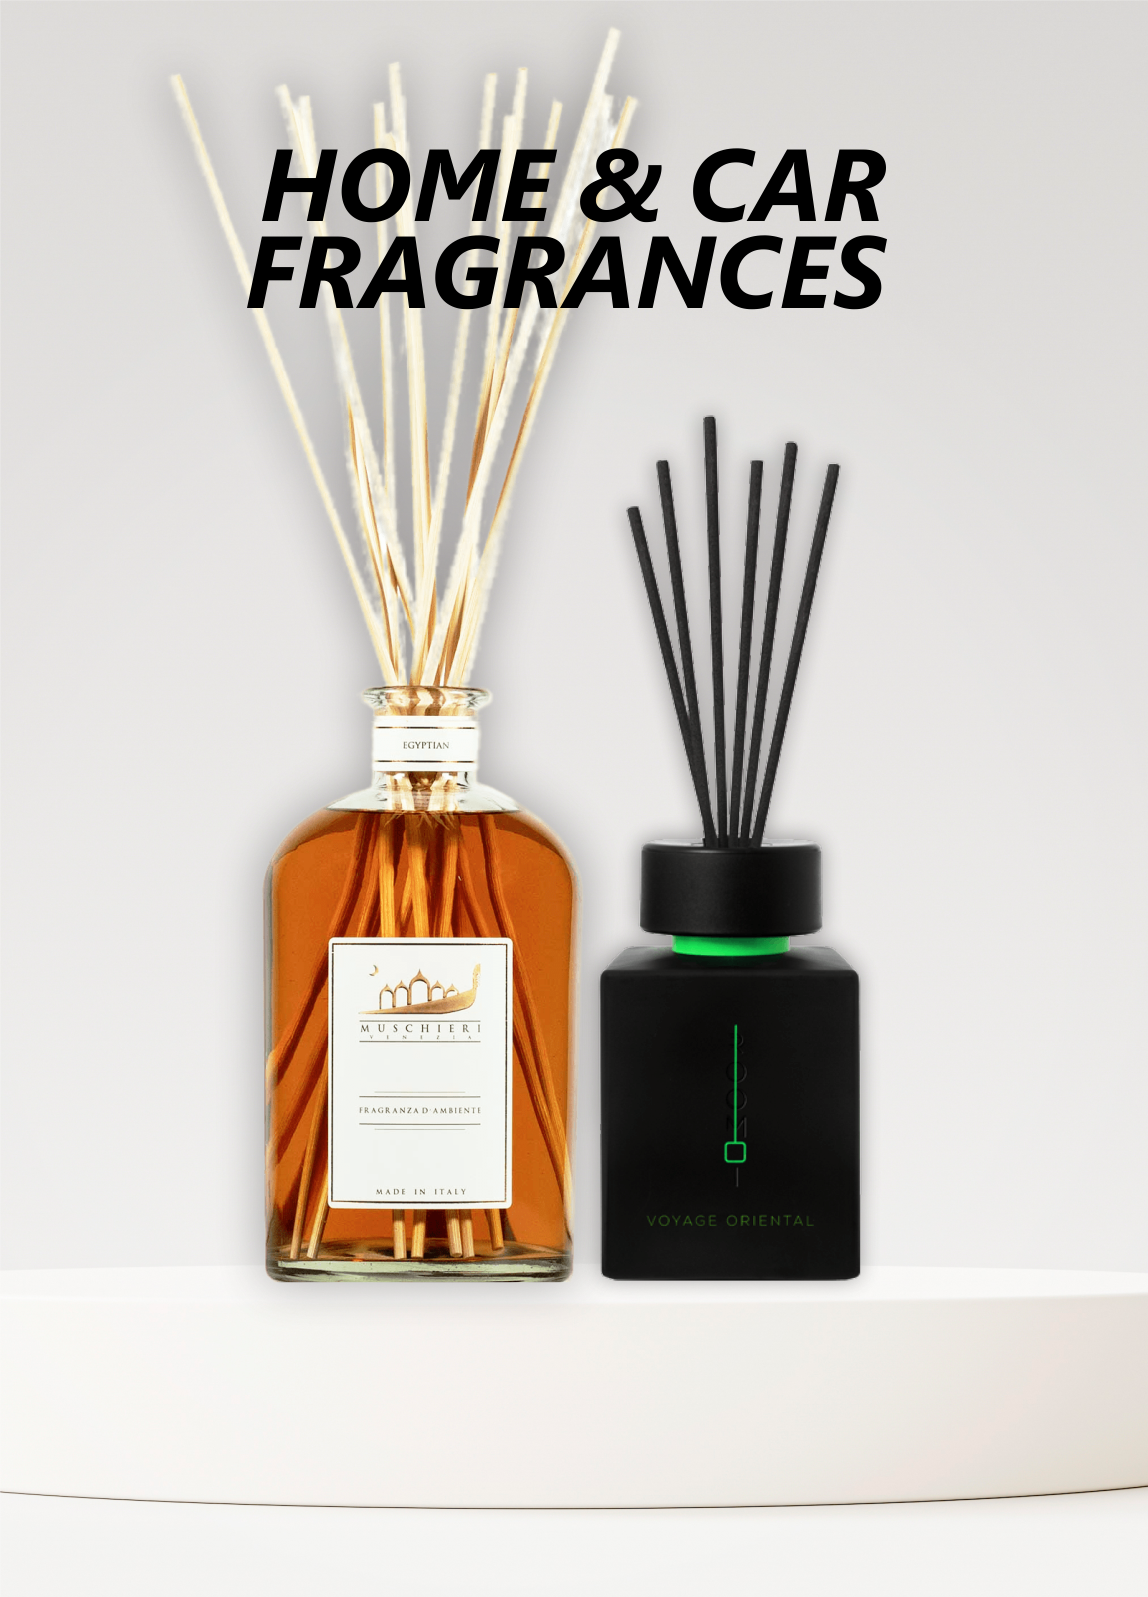 Home & Car Fragrances – Kingdom